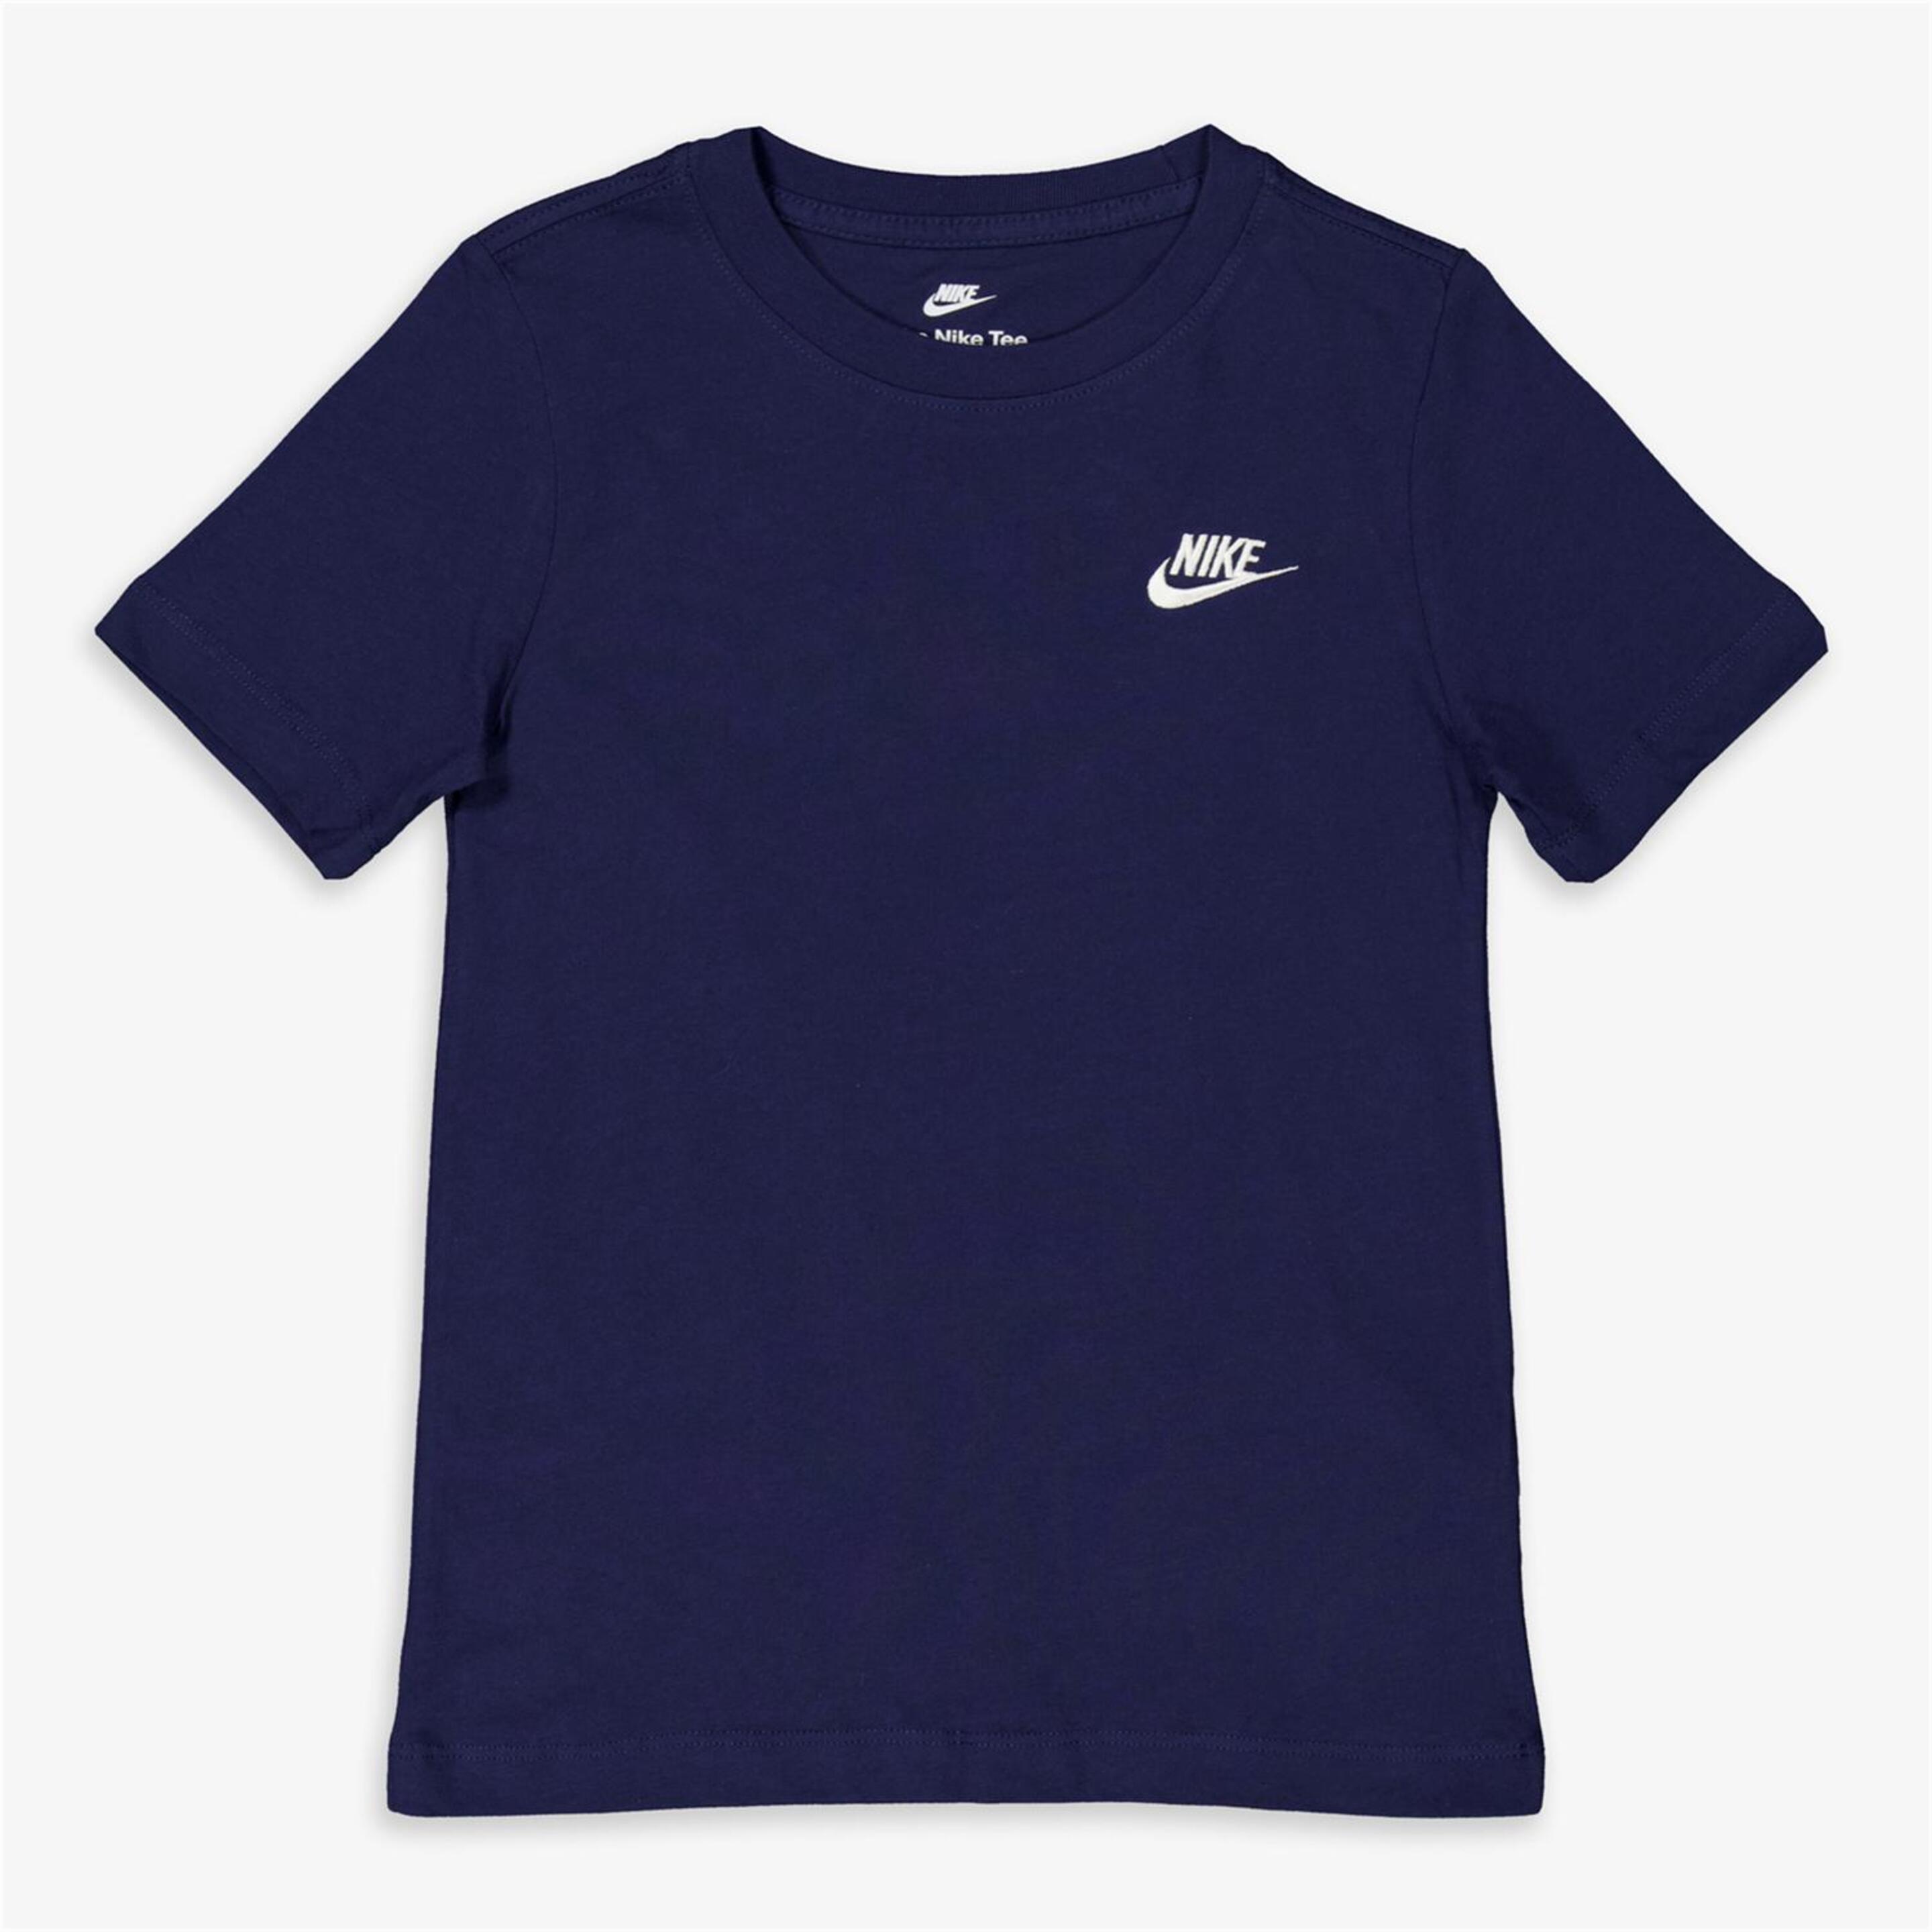 Camiseta Nike - azul - Camiseta Niño